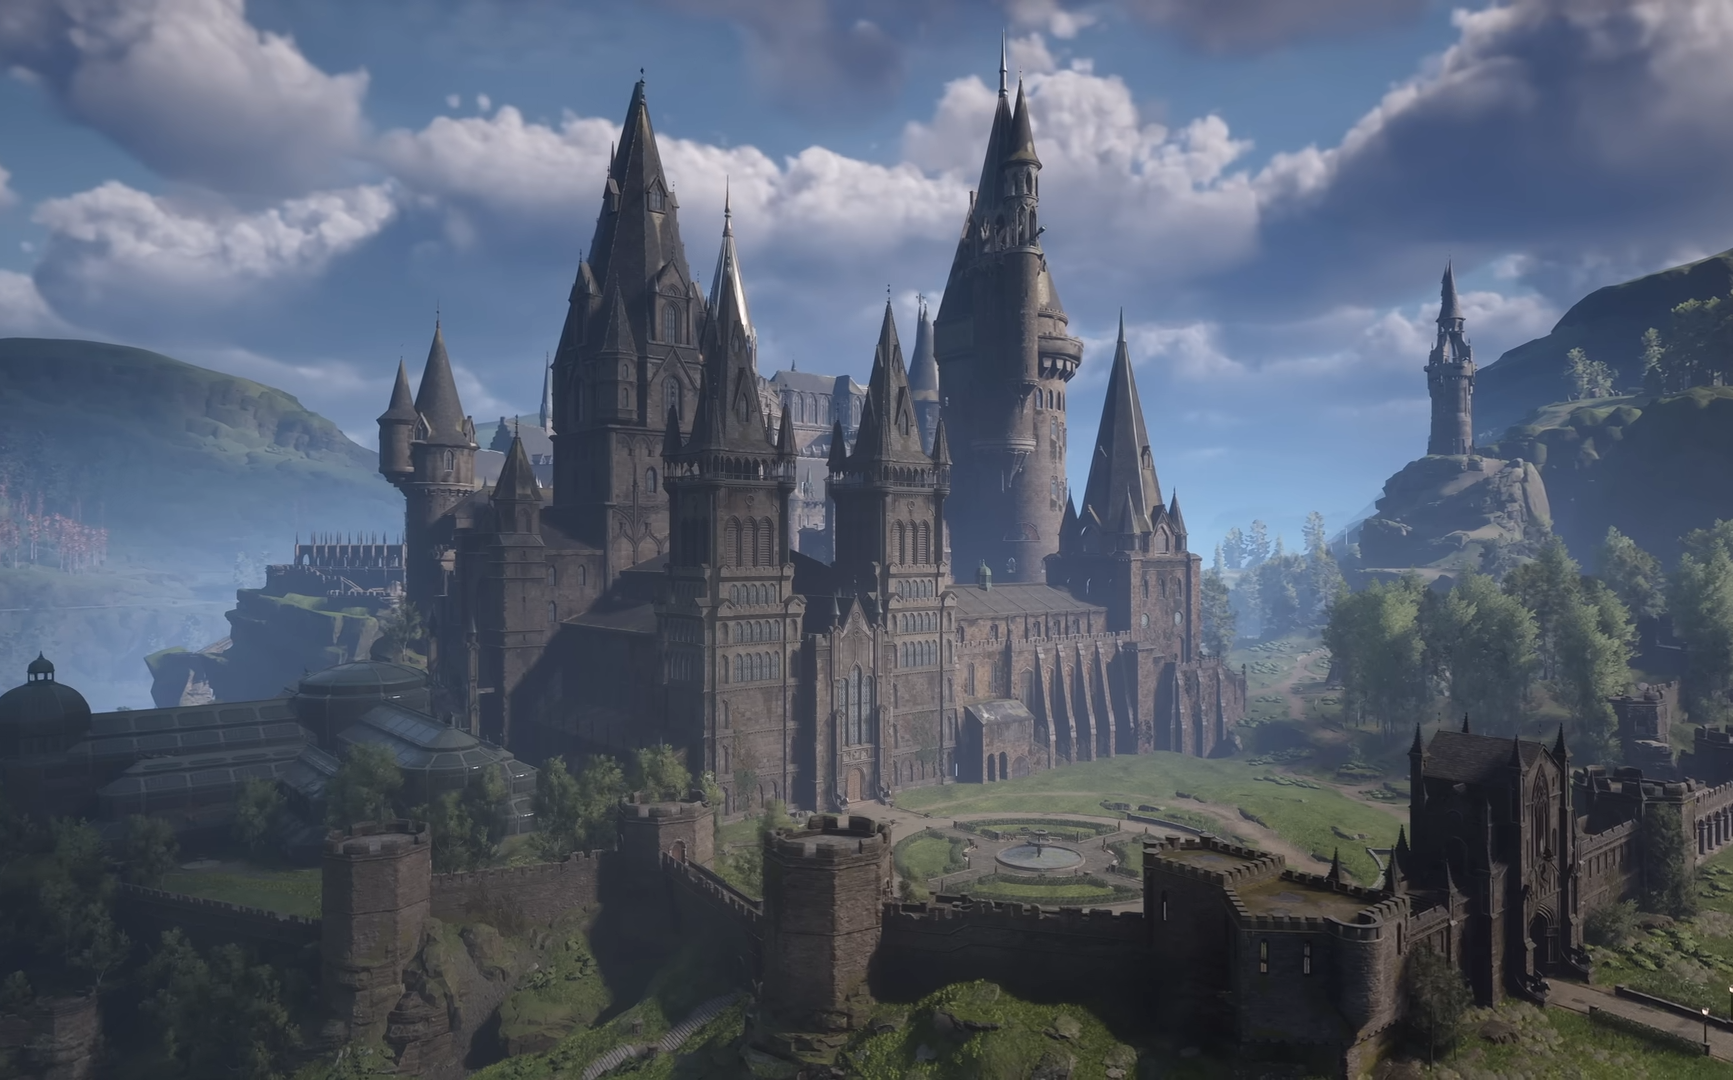 Hogwarts Legacy – Official 4K Reveal Trailer 